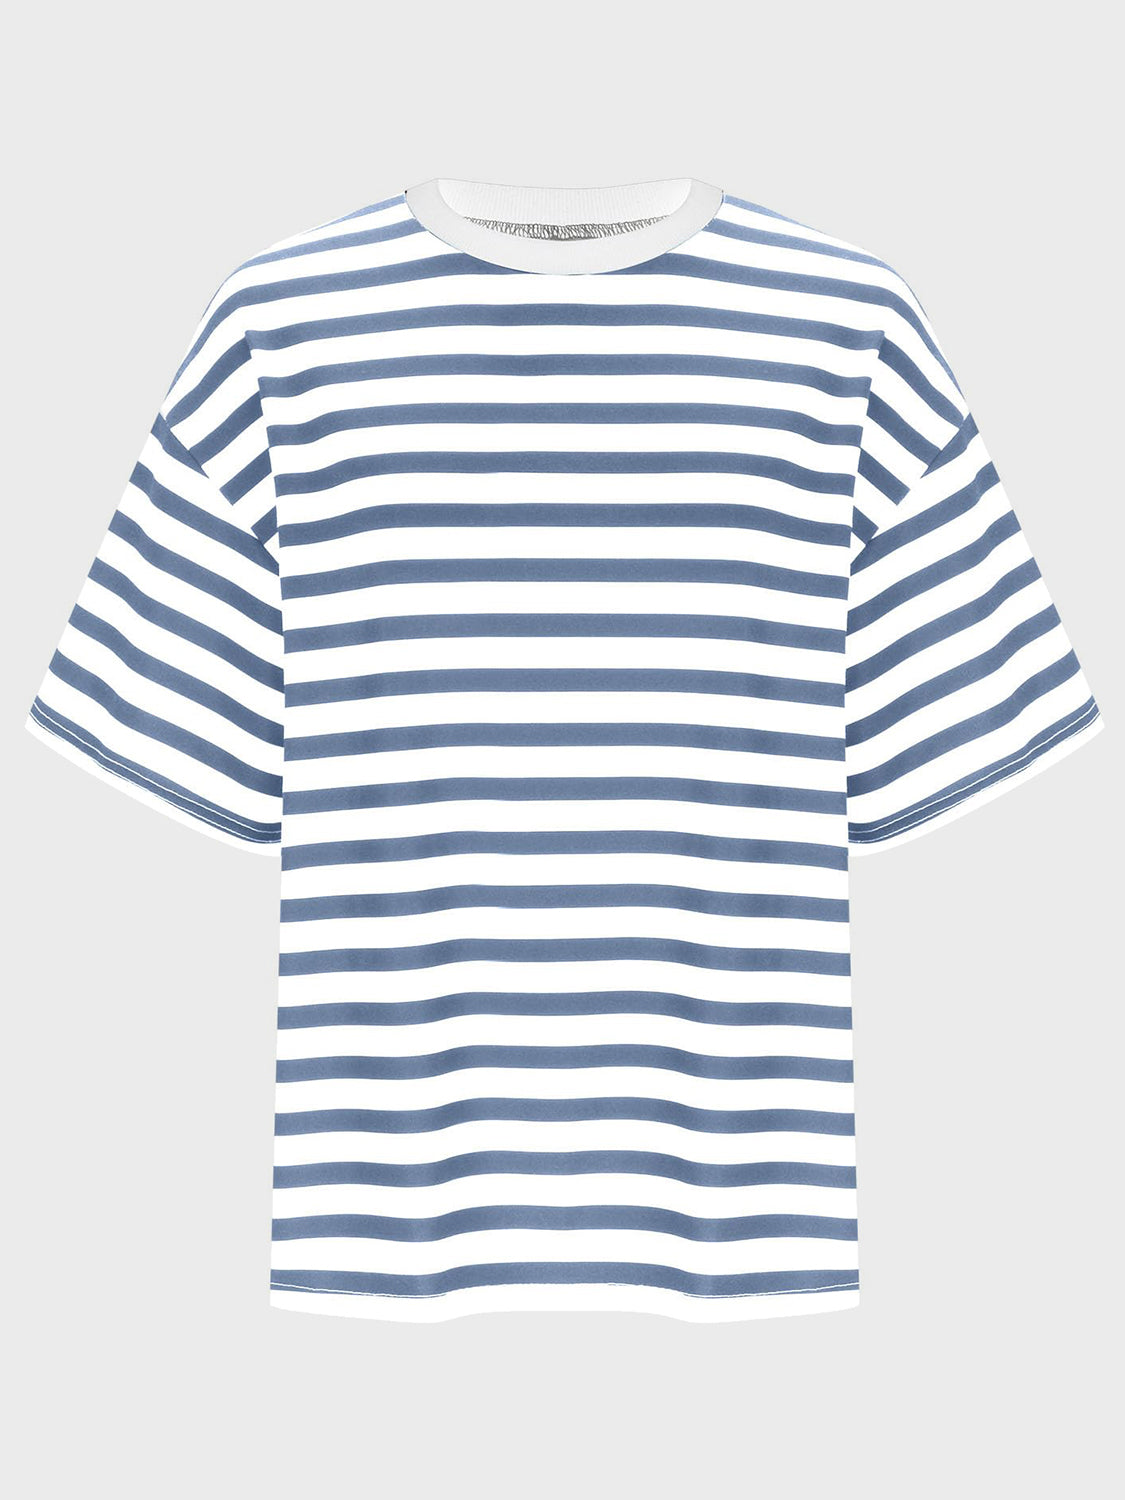 Striped Round Neck Half Sleeve T-Shirt - Ryzela